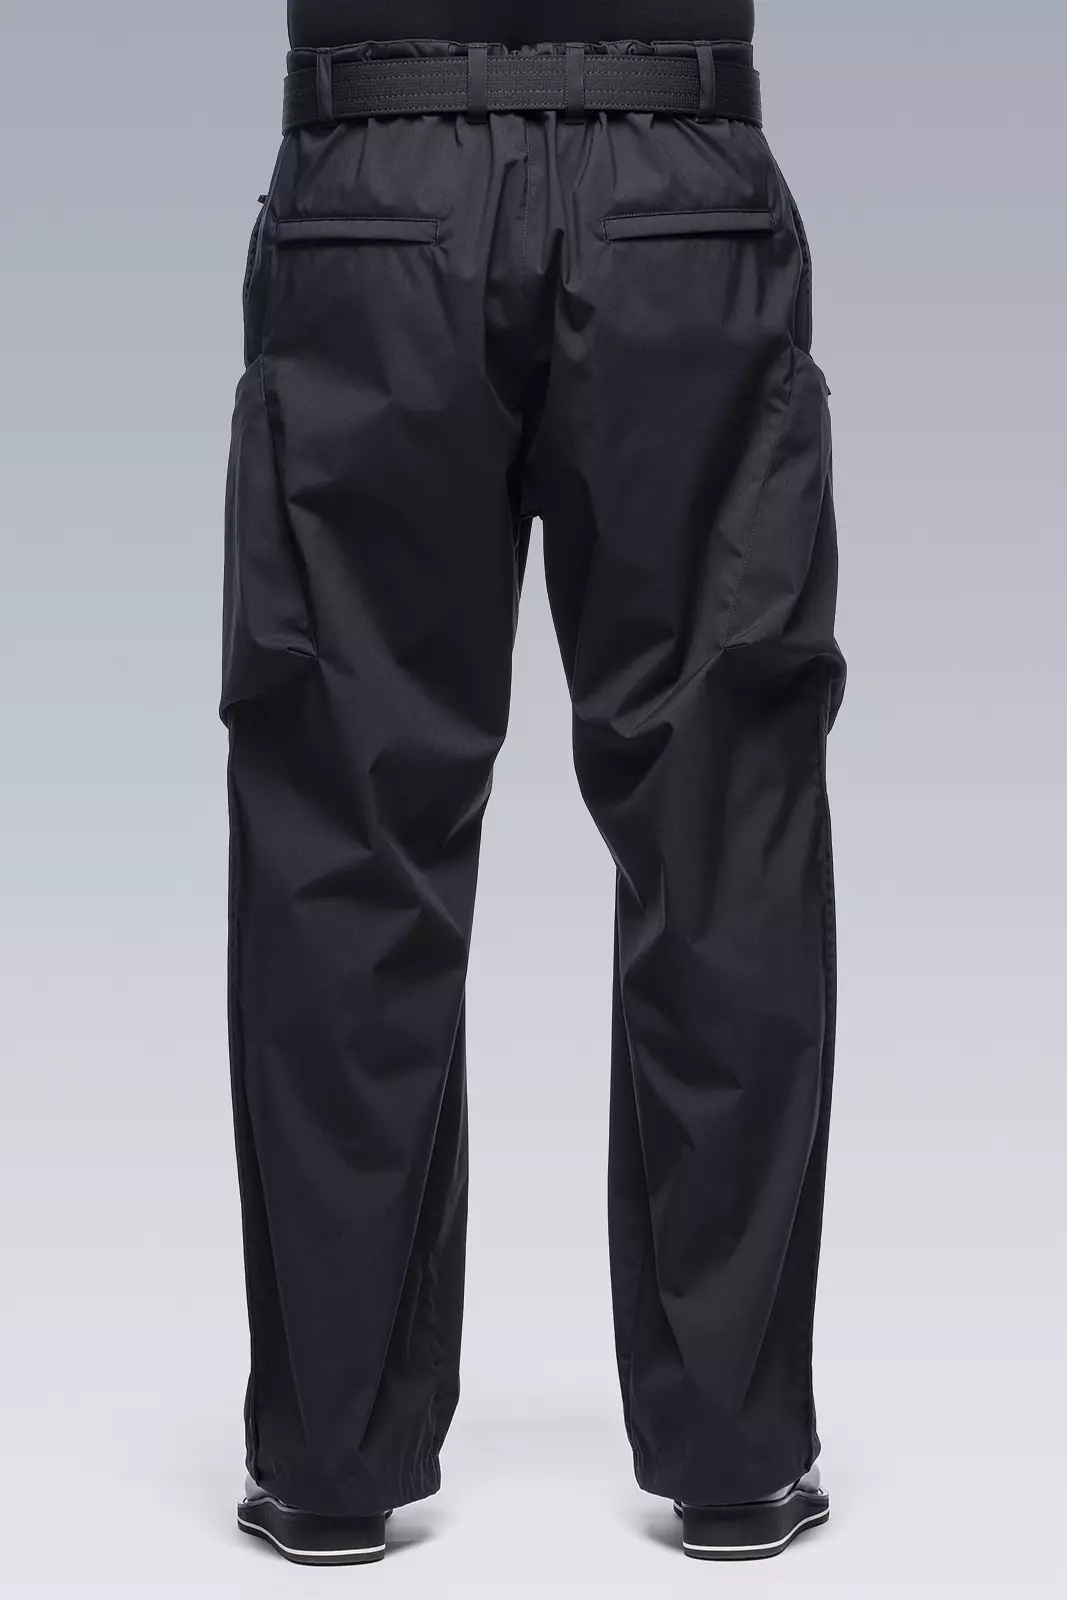 P45A-E Encapsulated Nylon Single Pleat Cargo Trouser Black - 7